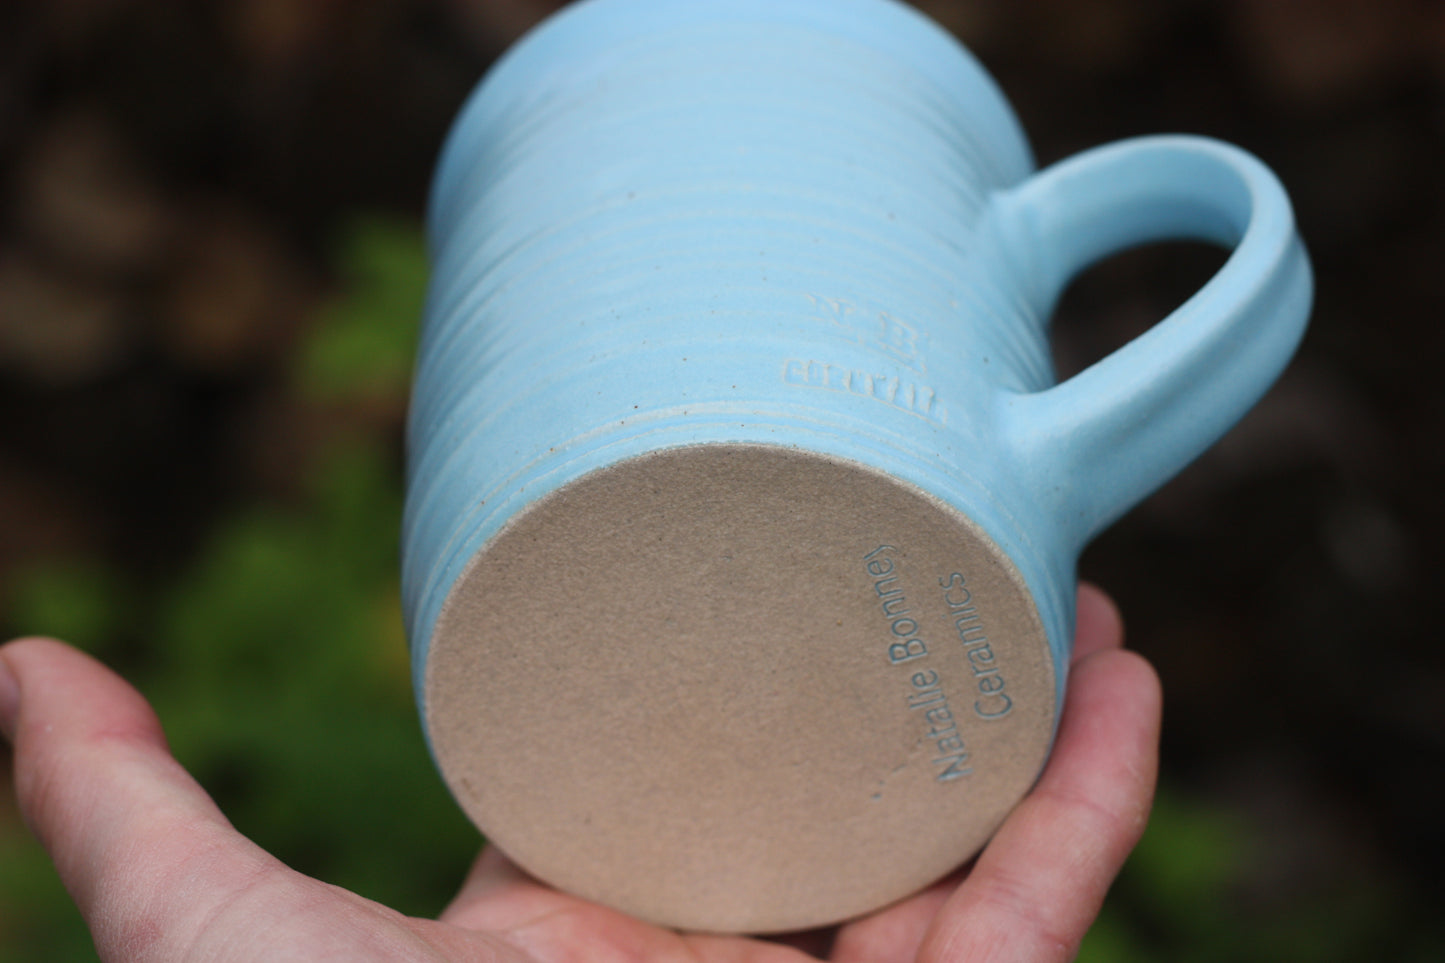 350ml 13 oz Mug Turquoise Blue glaze handmade pottery ceramic cup